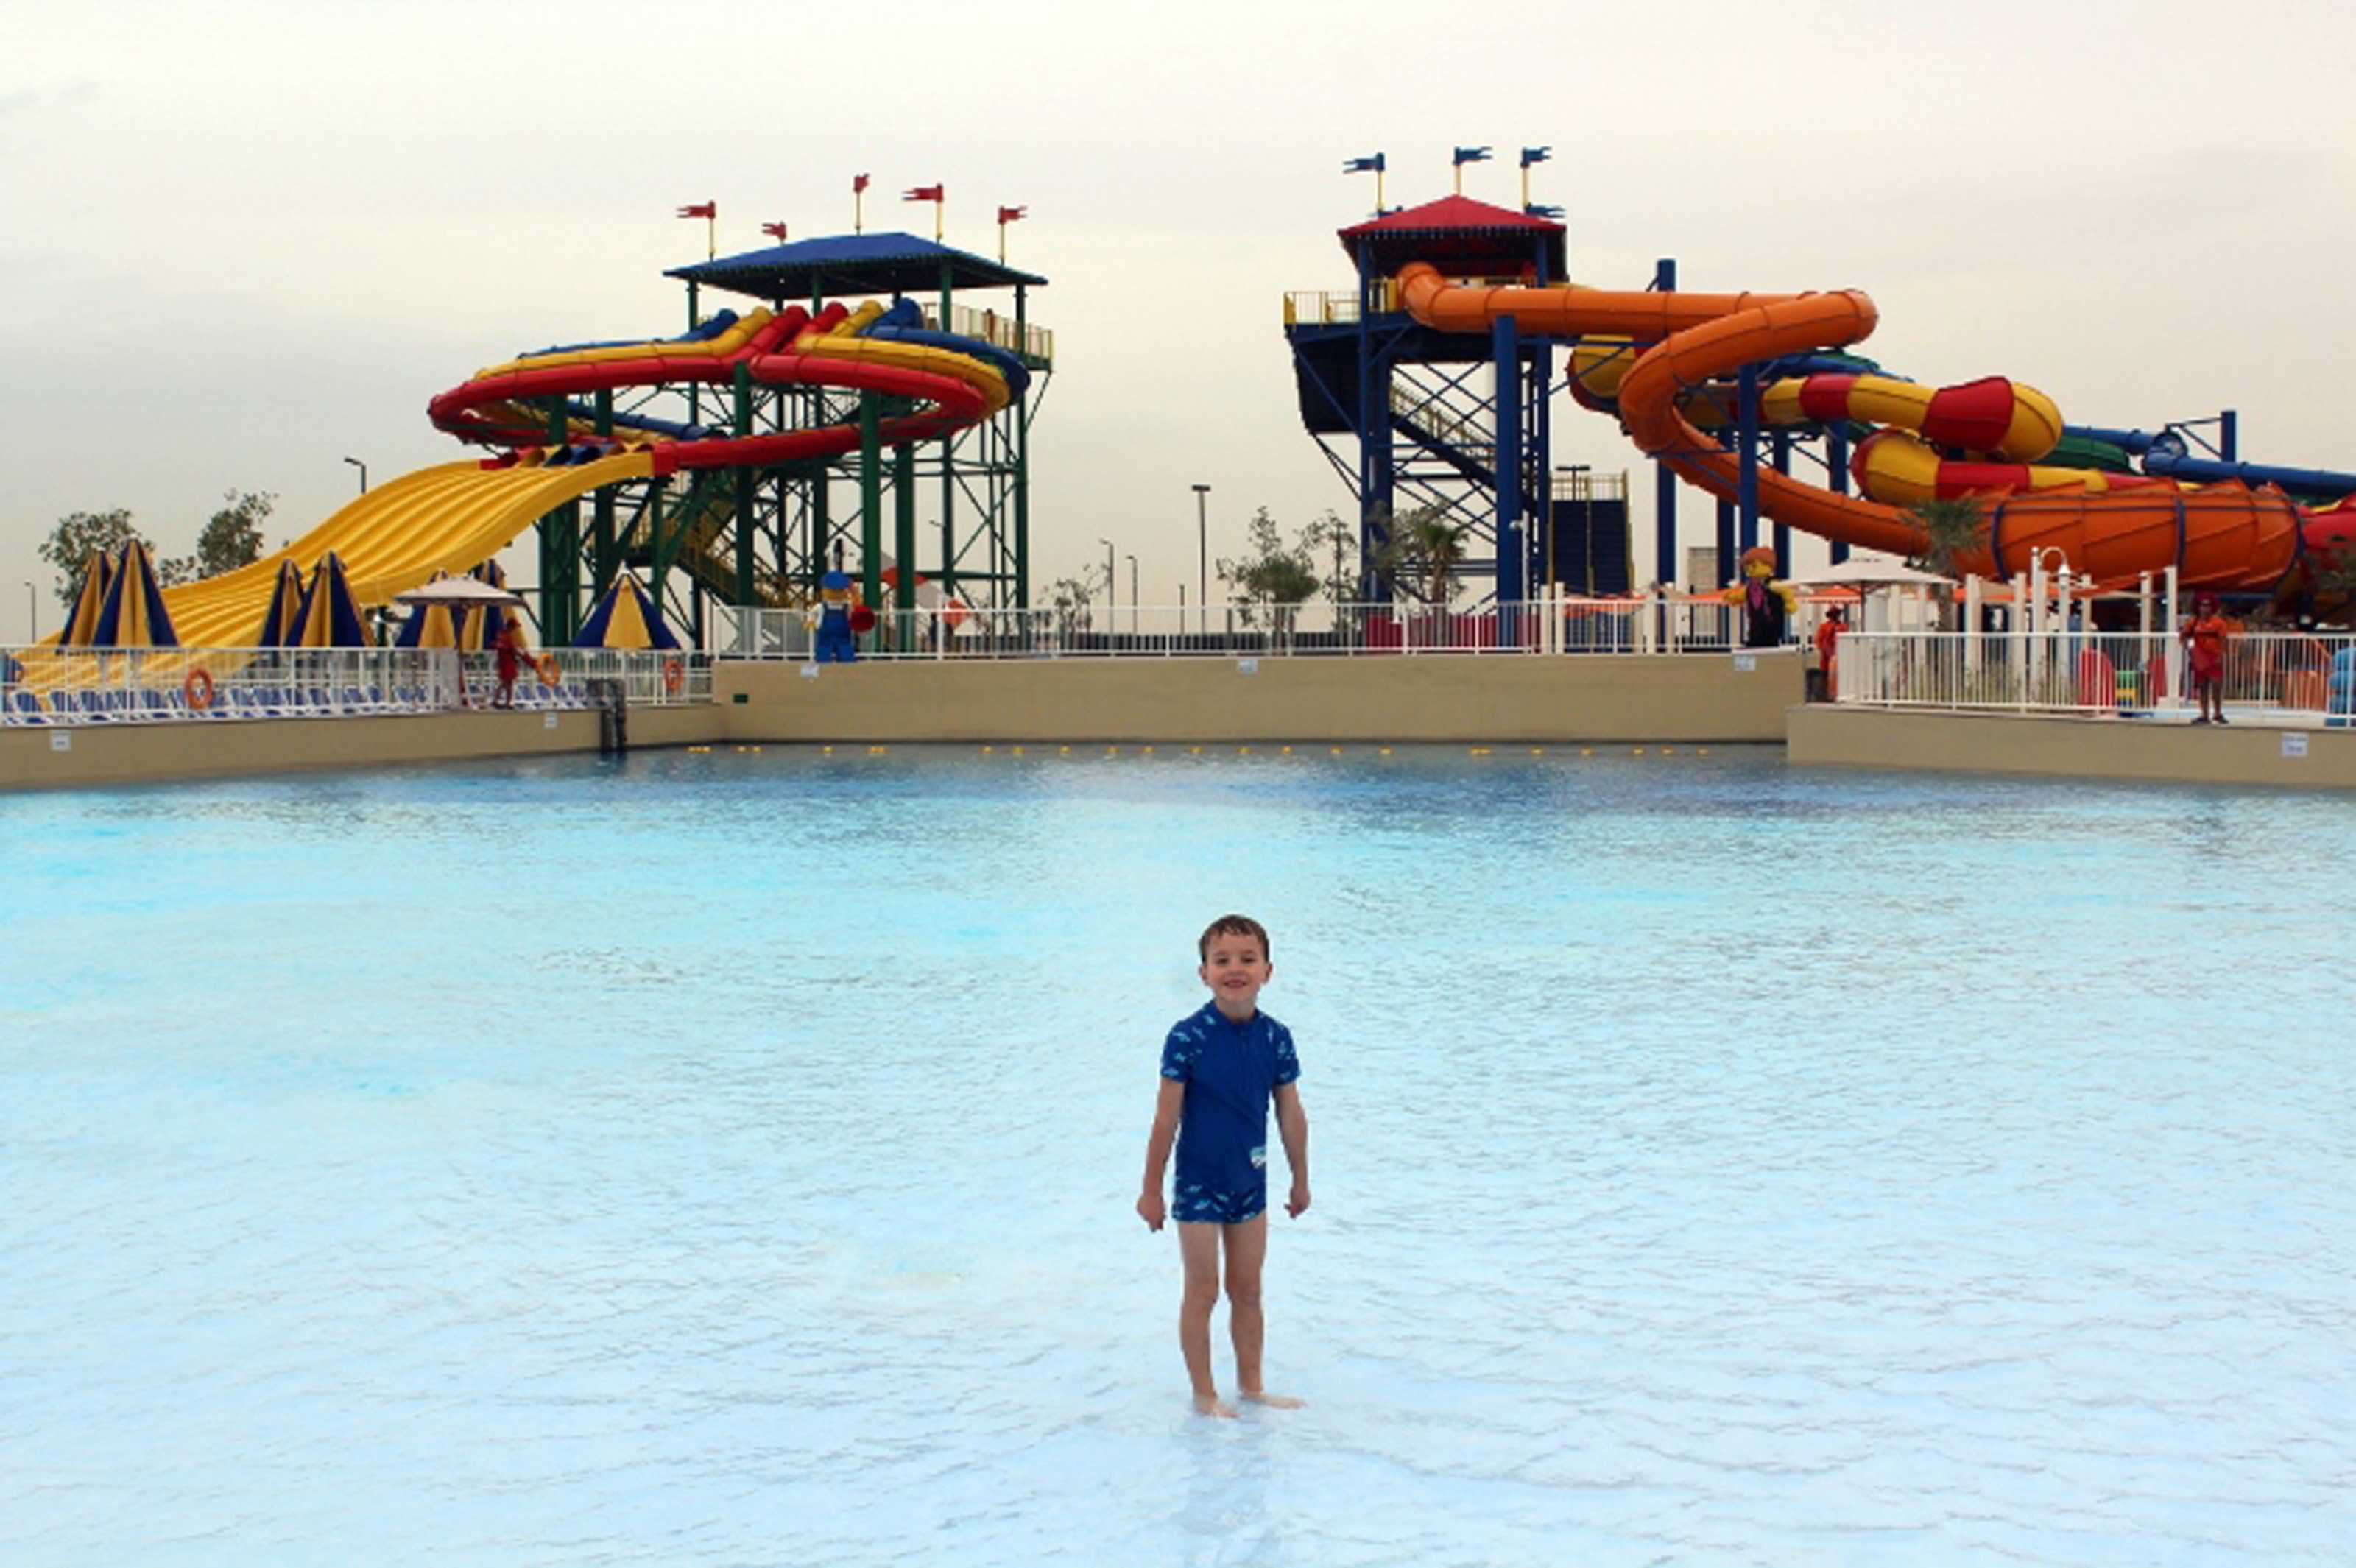 Arthur Catherall, 5, at Legoland Dubai Water Park.